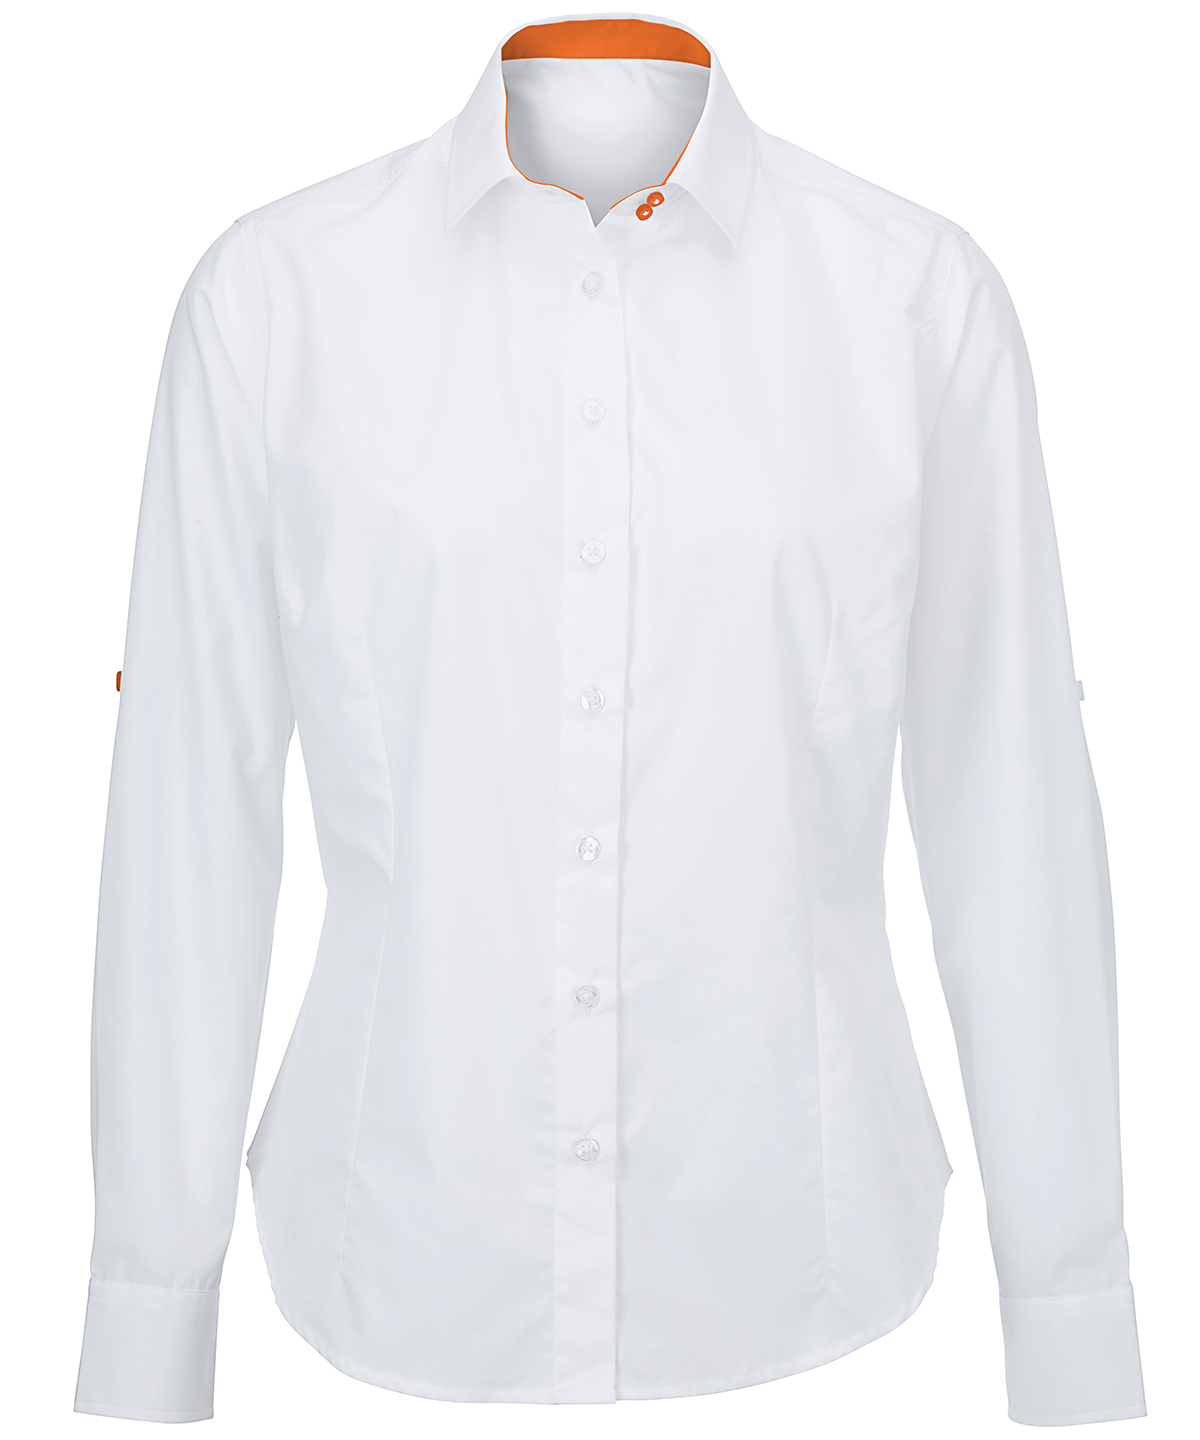 Women's white roll-up sleeve shirt (NF521W)